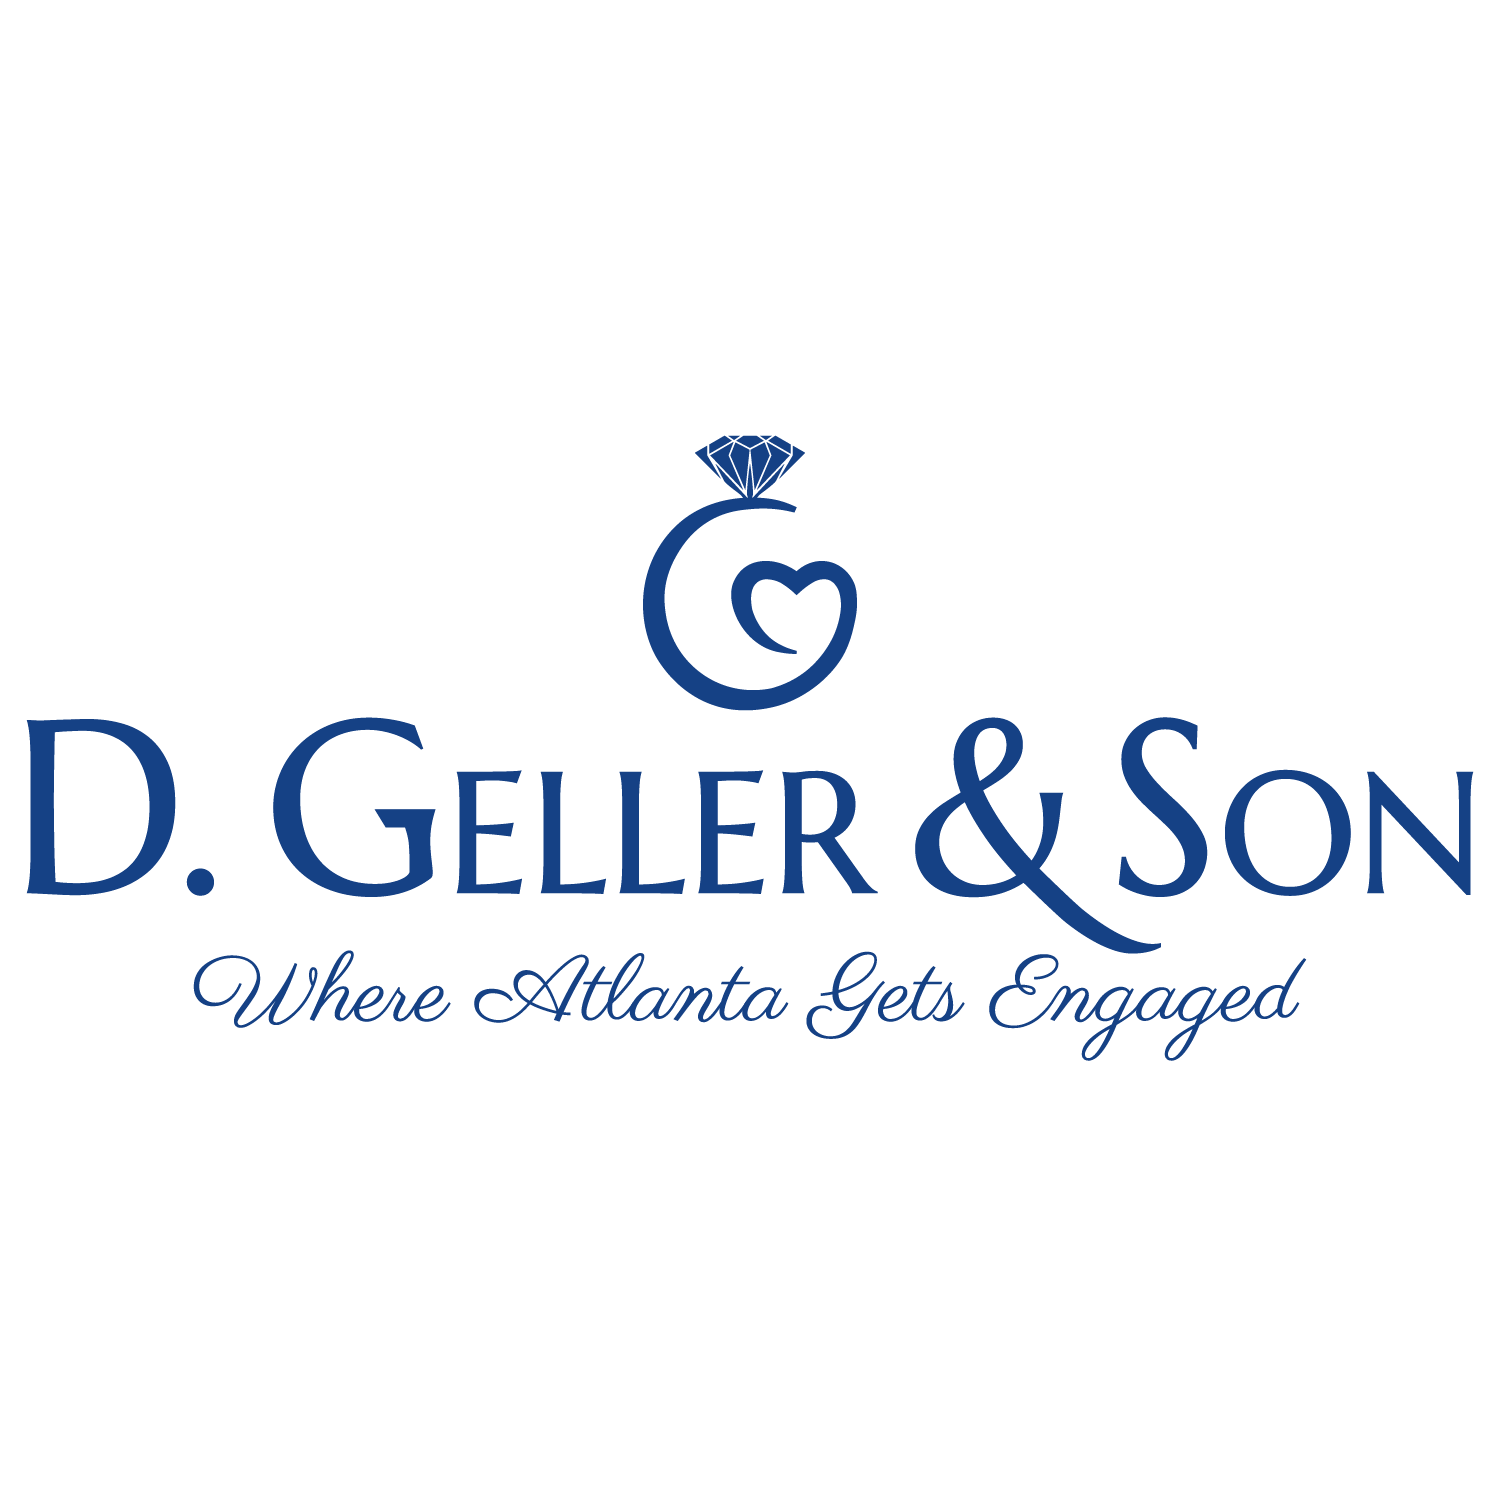 D. Geller & Son - Kennesaw, GA 30144 - (770)955-5995 | ShowMeLocal.com